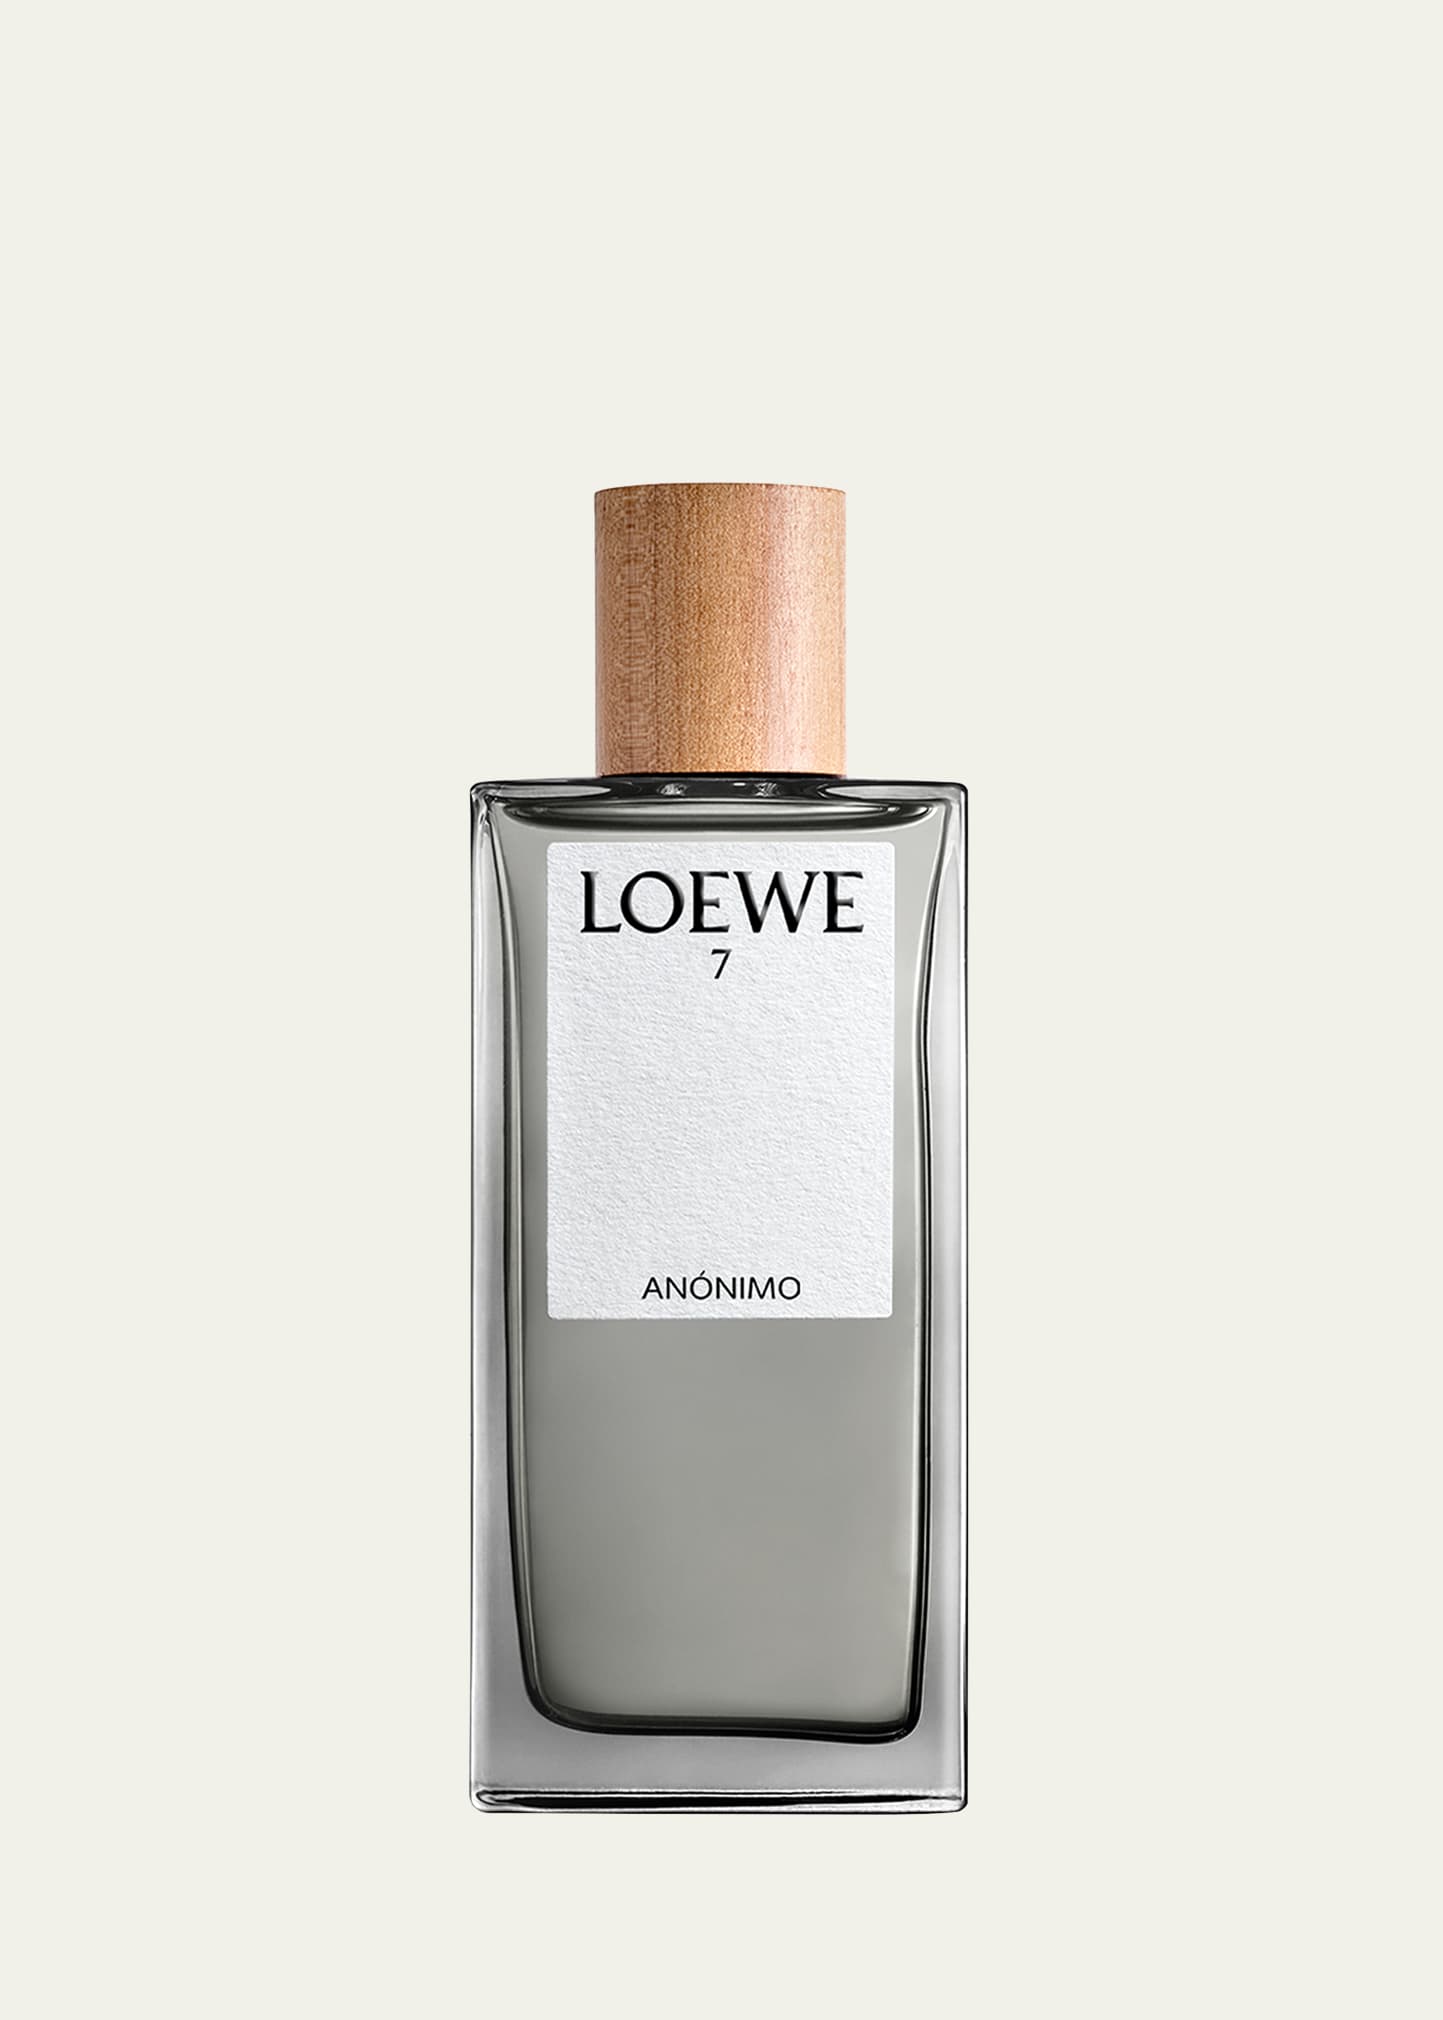 Loewe 3.4 oz. 7 Anonimo Eau de Parfum